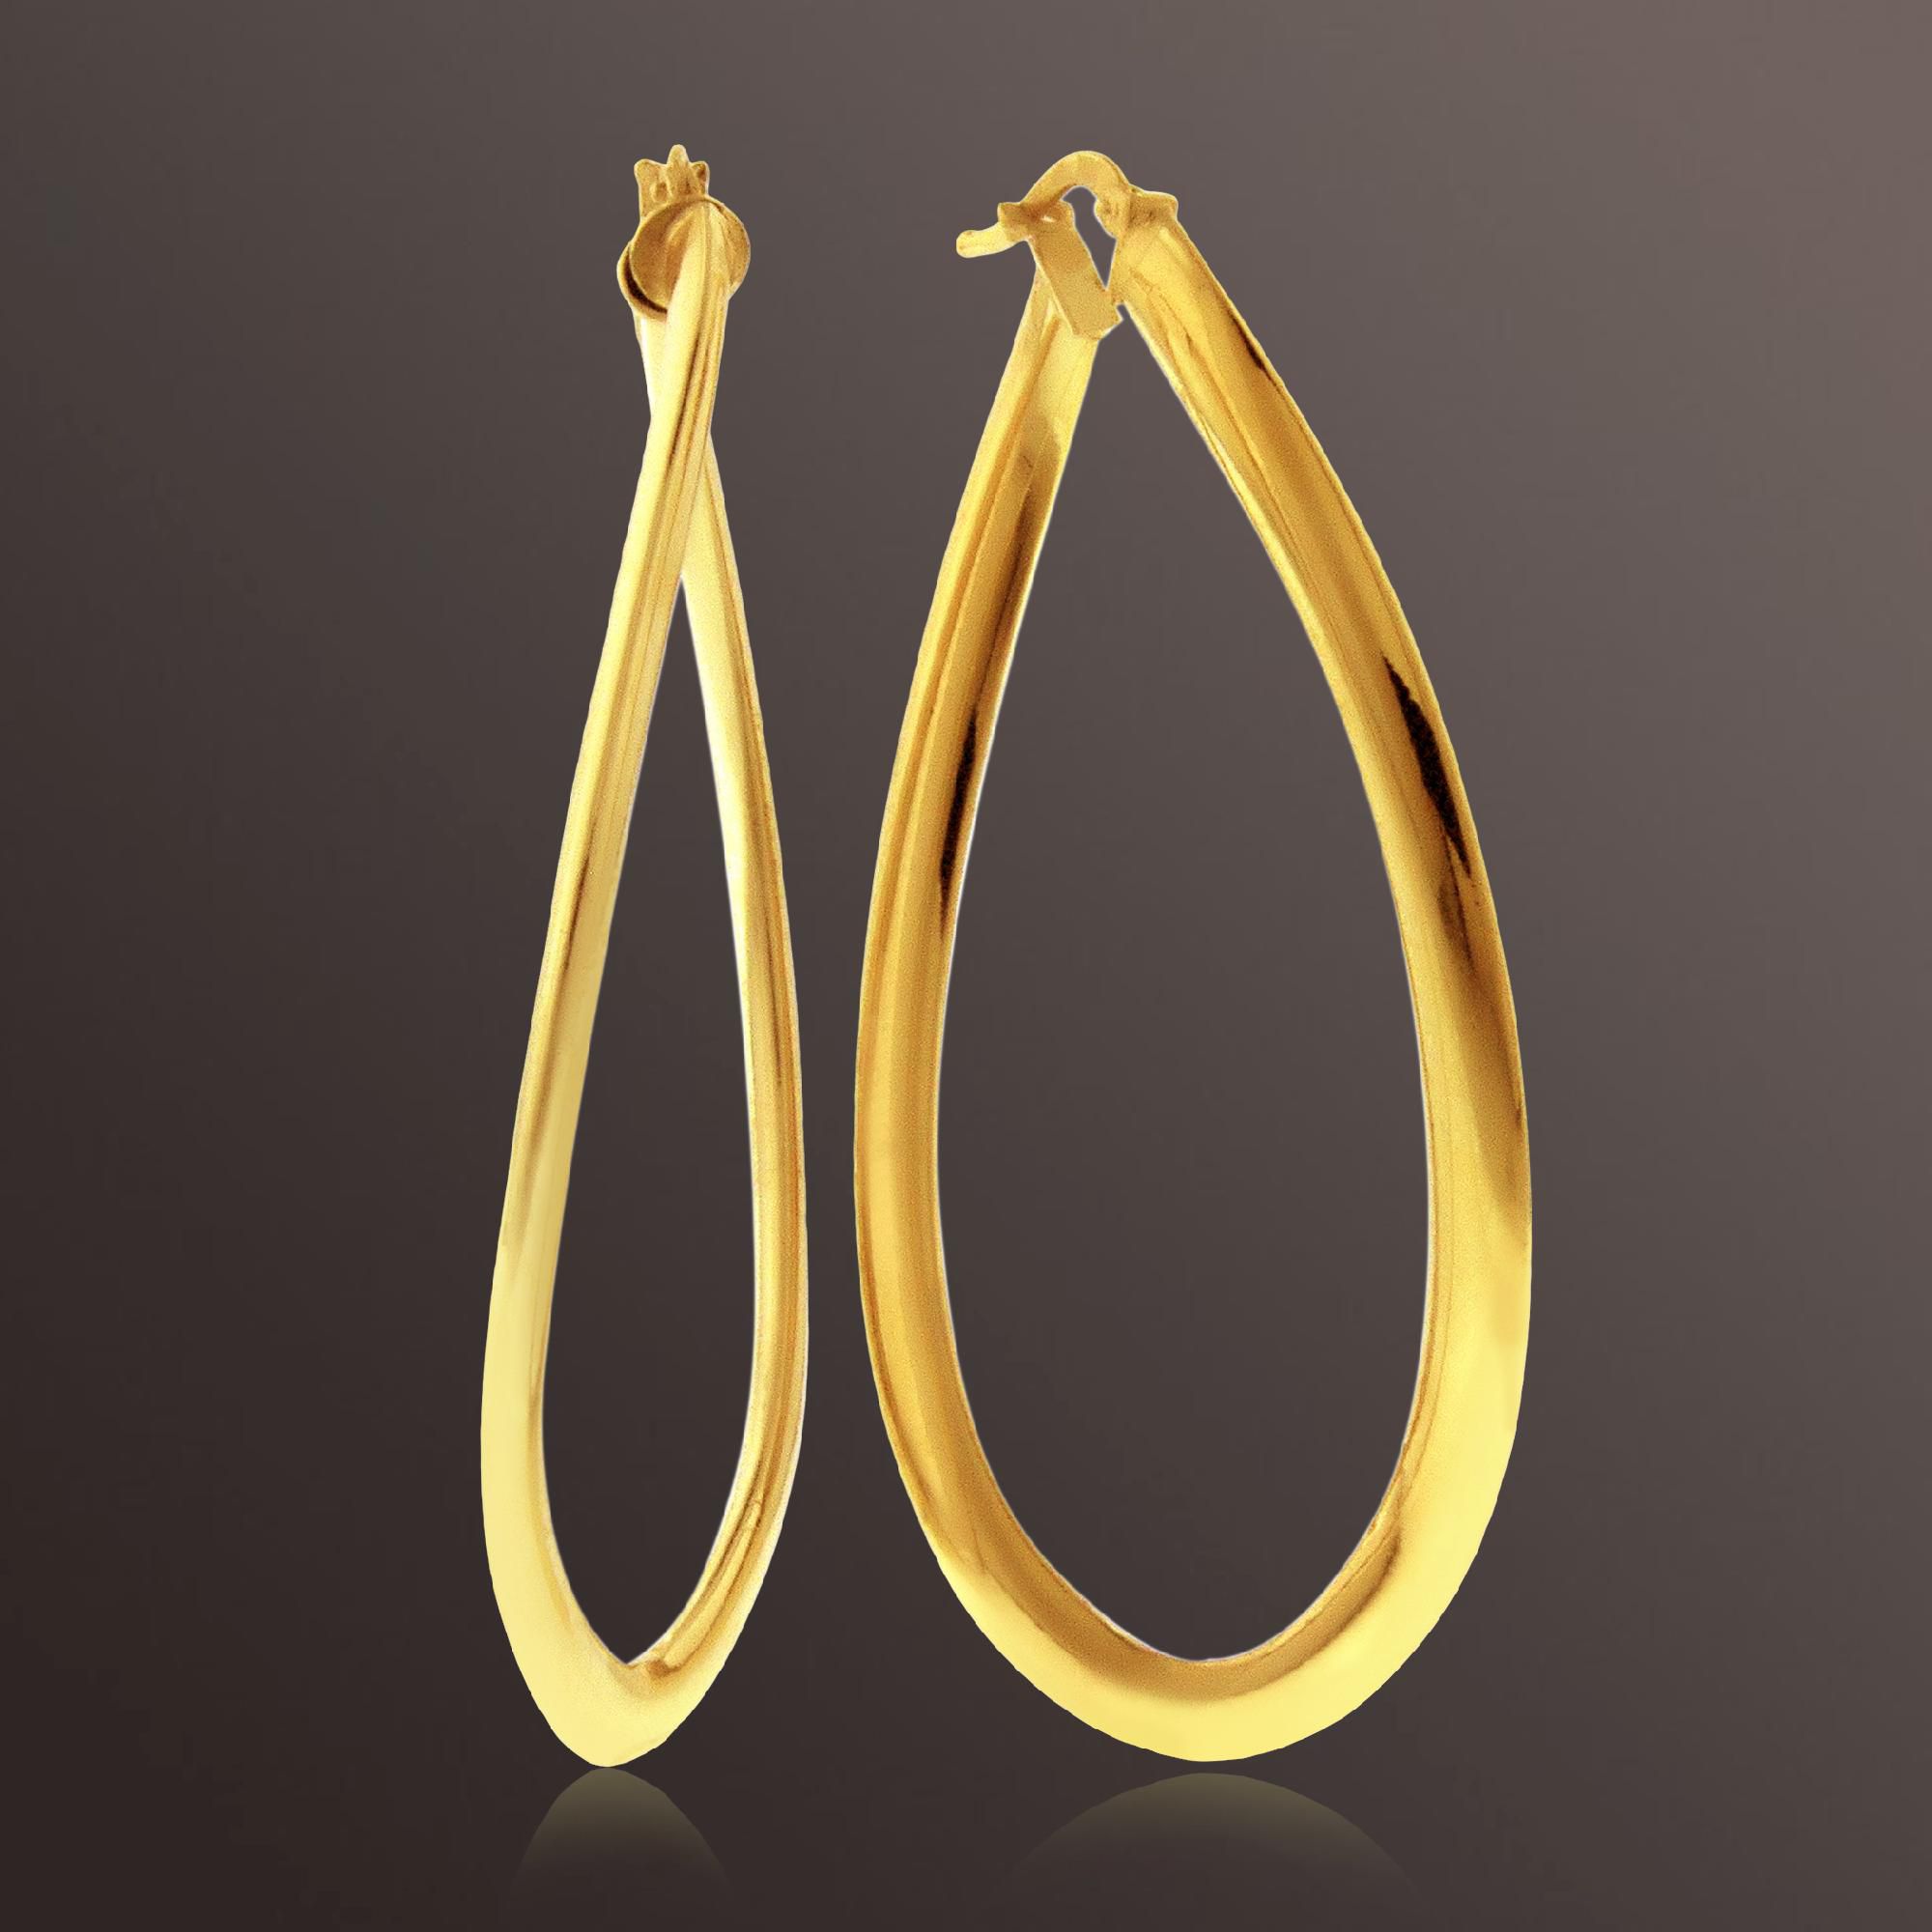 Romanza Teardrop Hoop Earrings set in Gold over Bronze